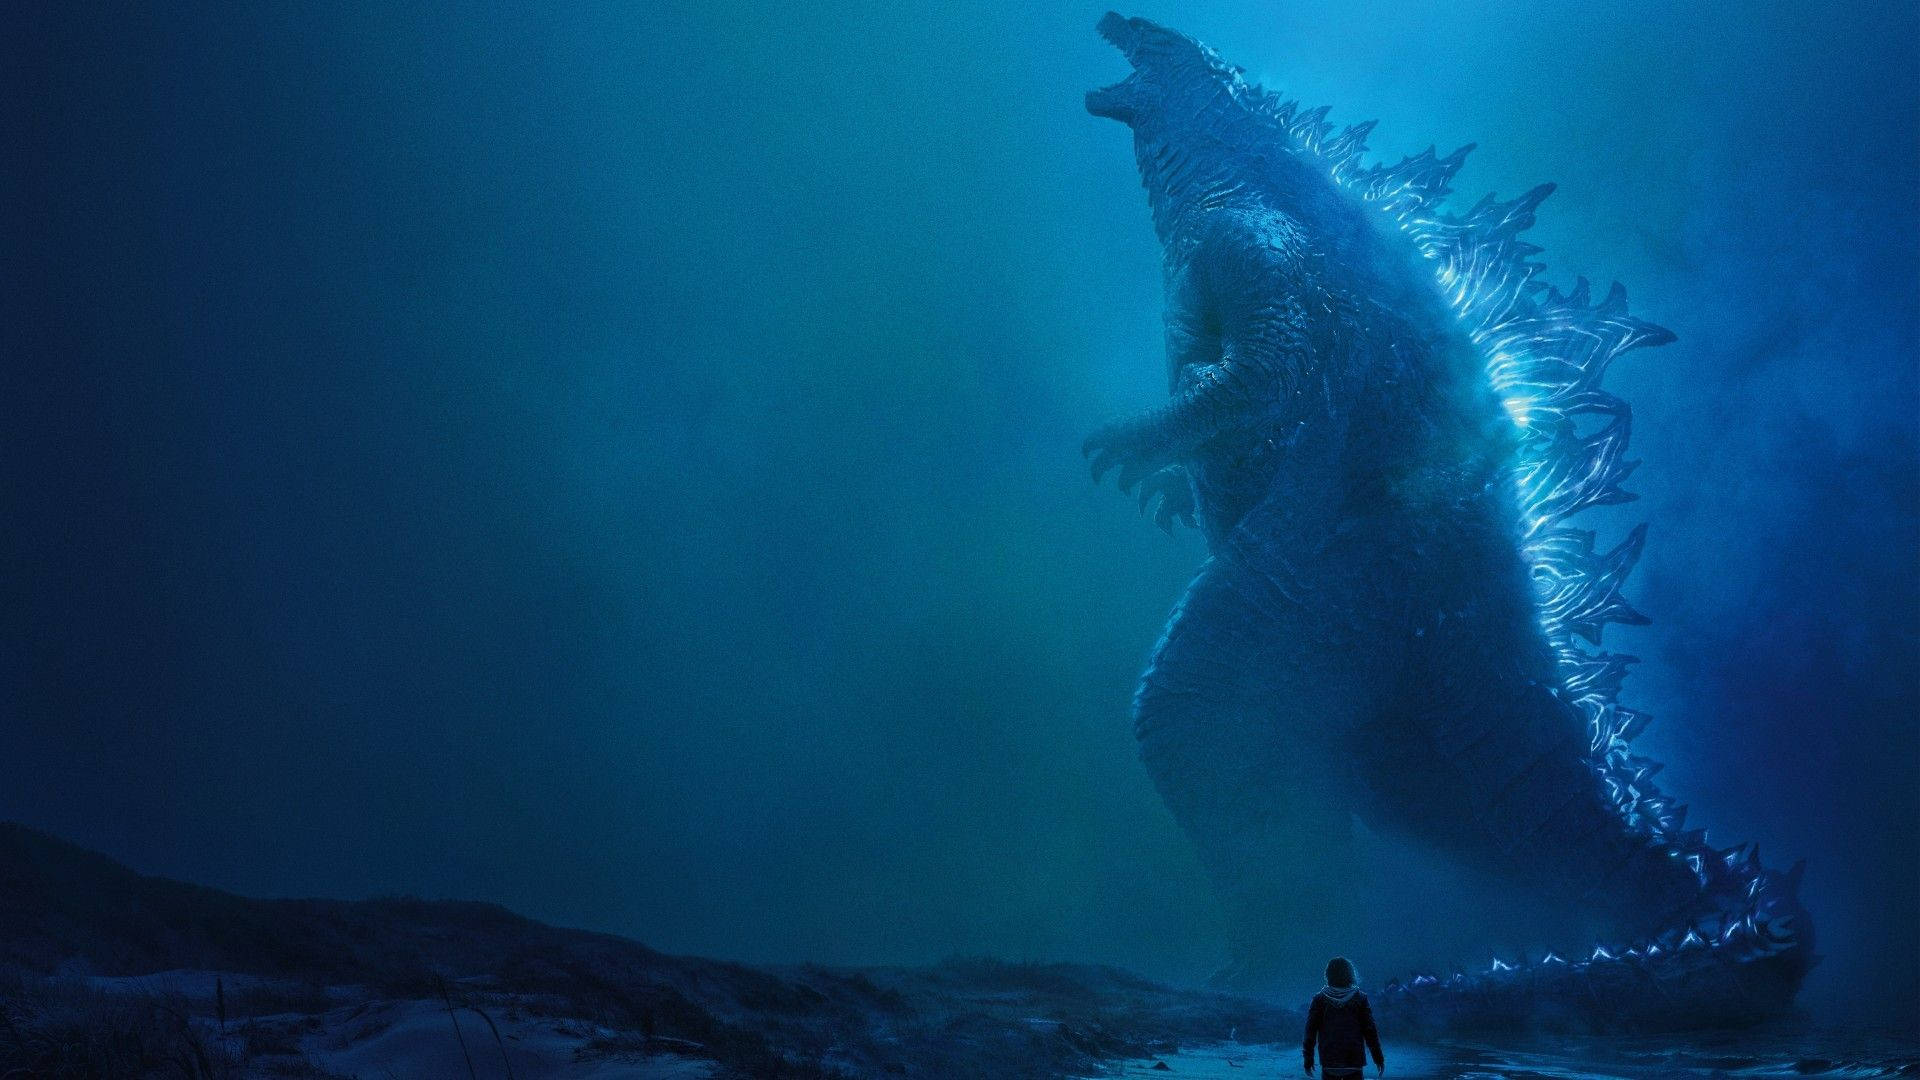 "King of the Monsters: Godzilla" Wallpaper